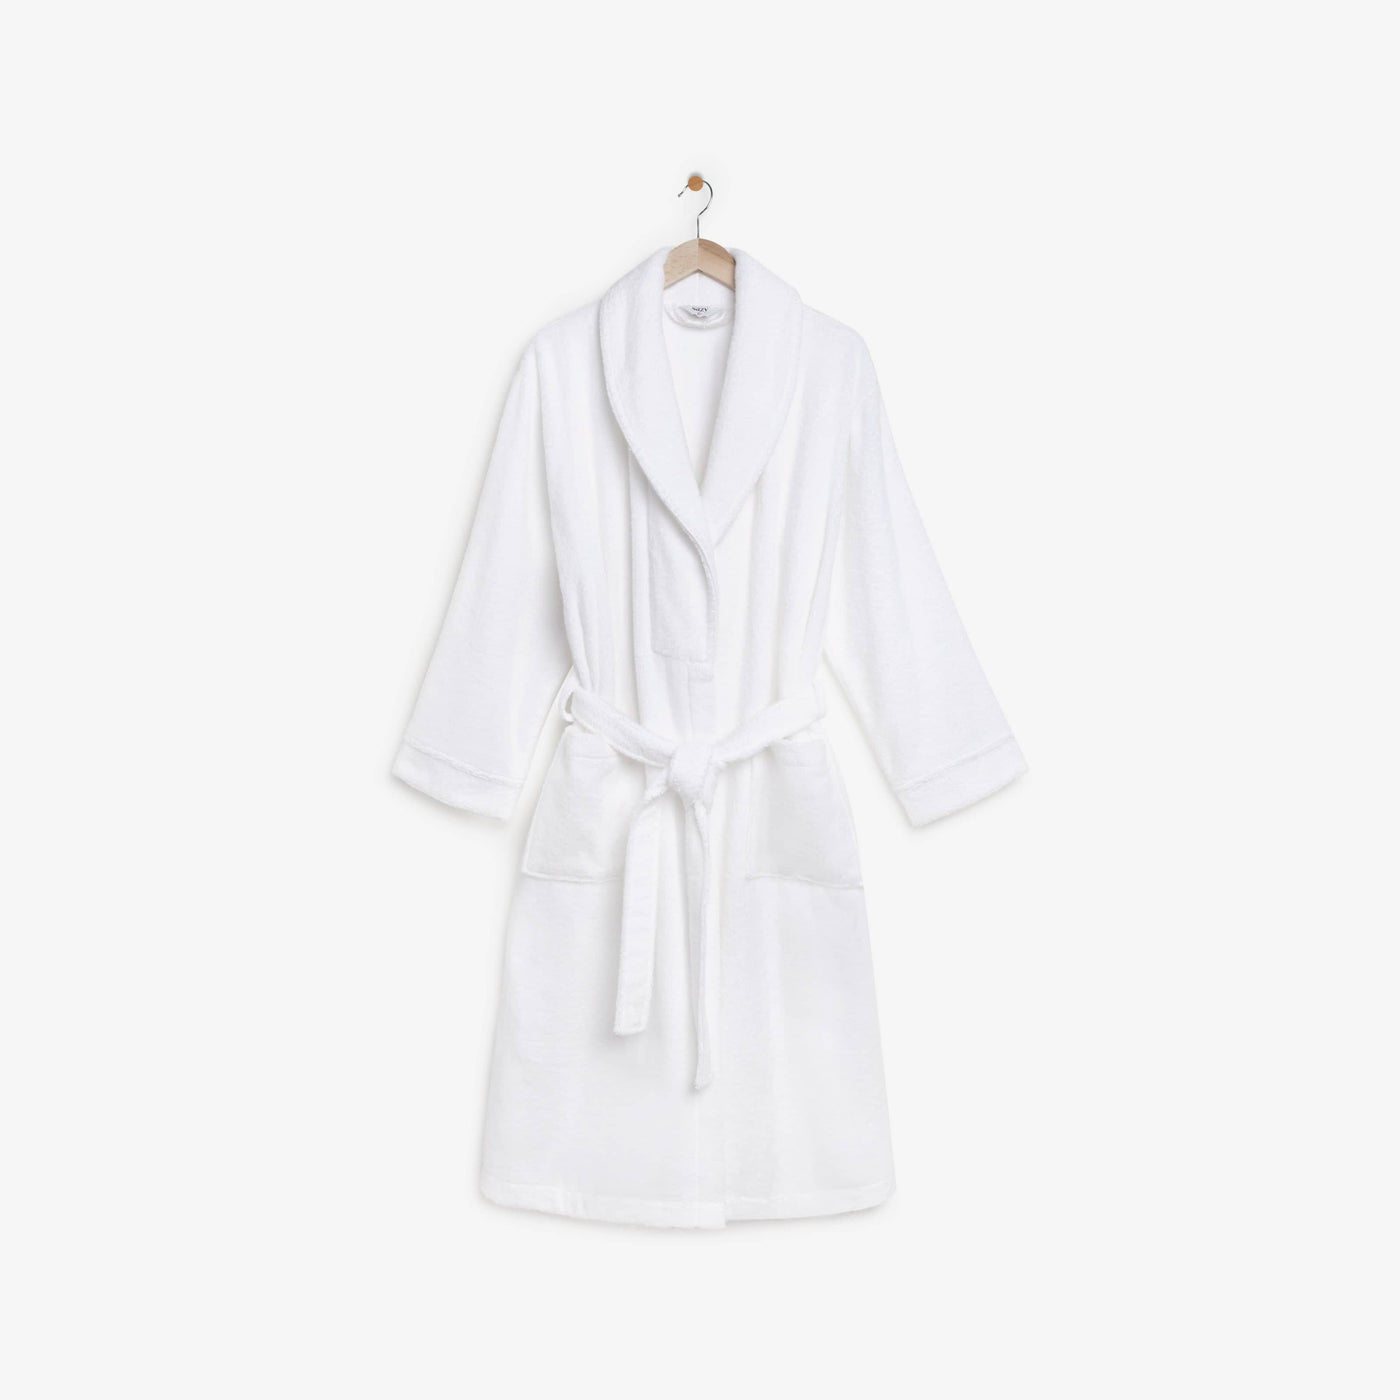 Rupert Aqua Fibro Extra Soft 100% Turkish Cotton Men's Dressing Gown, White, L Dressing Gowns sazy.com